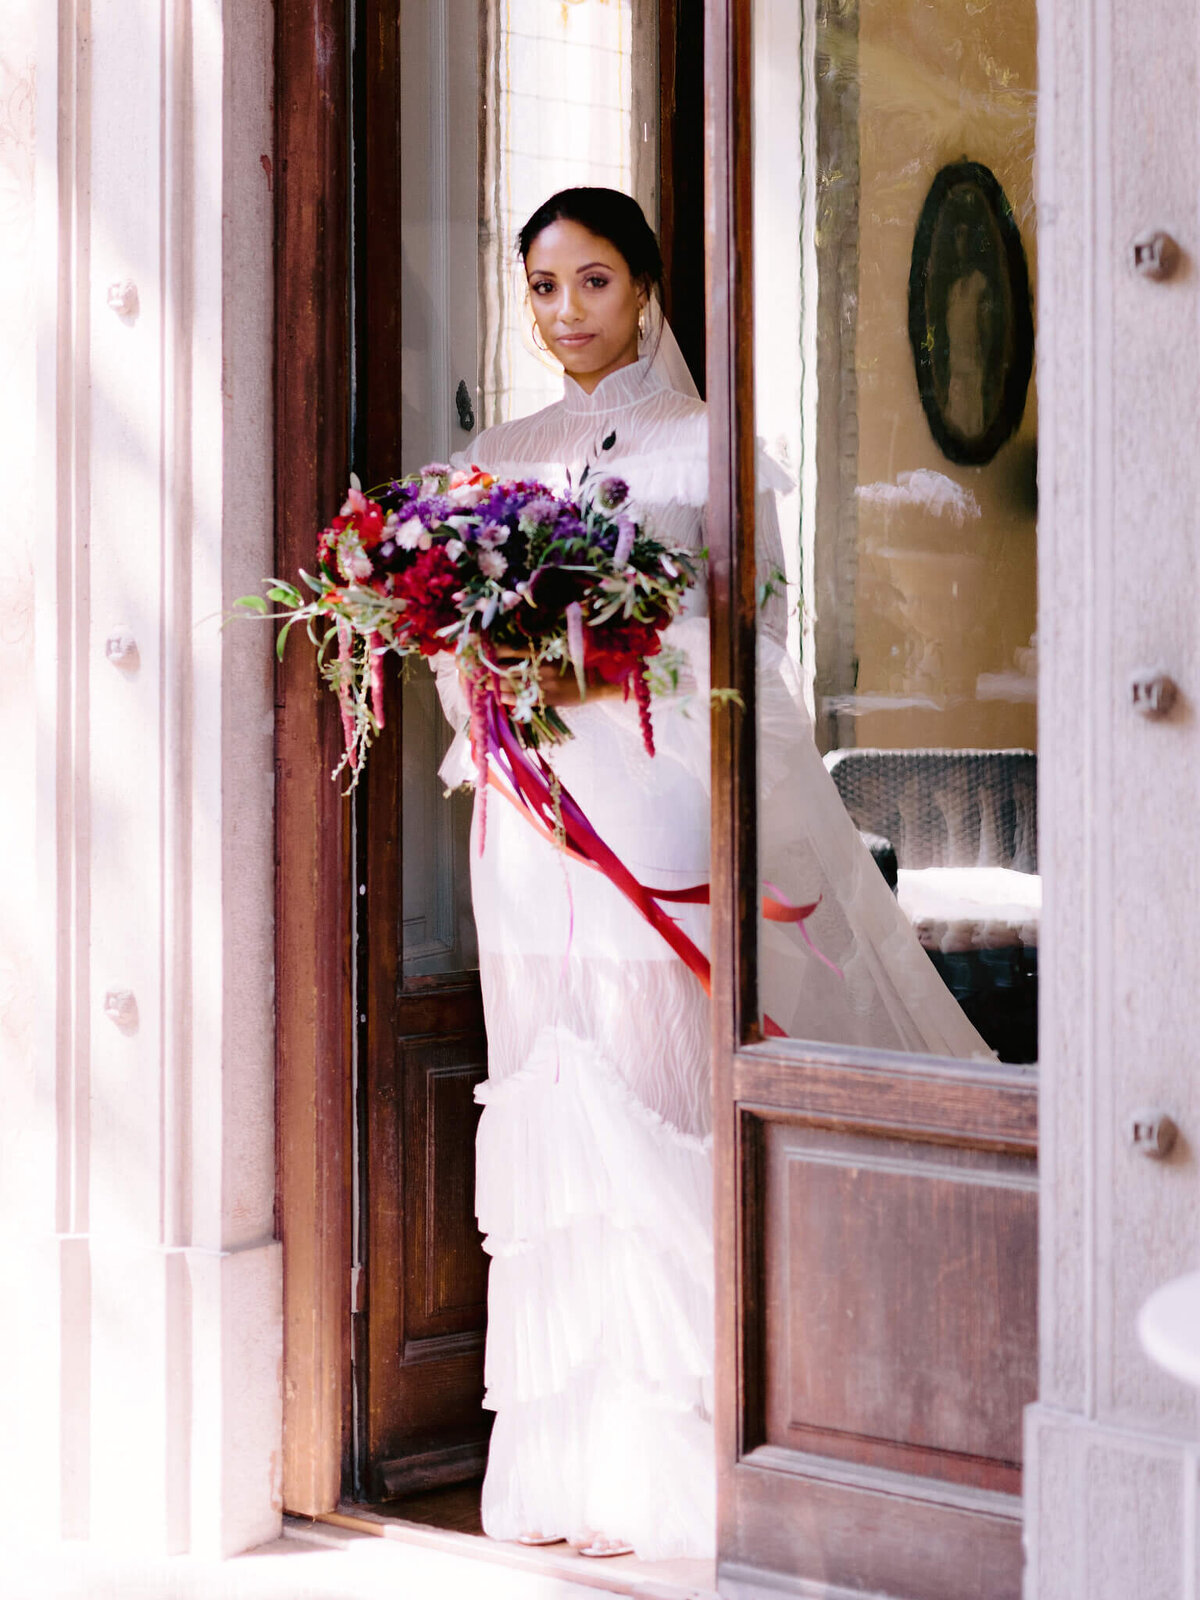 Bride holding a flower bouquet, standing on a door